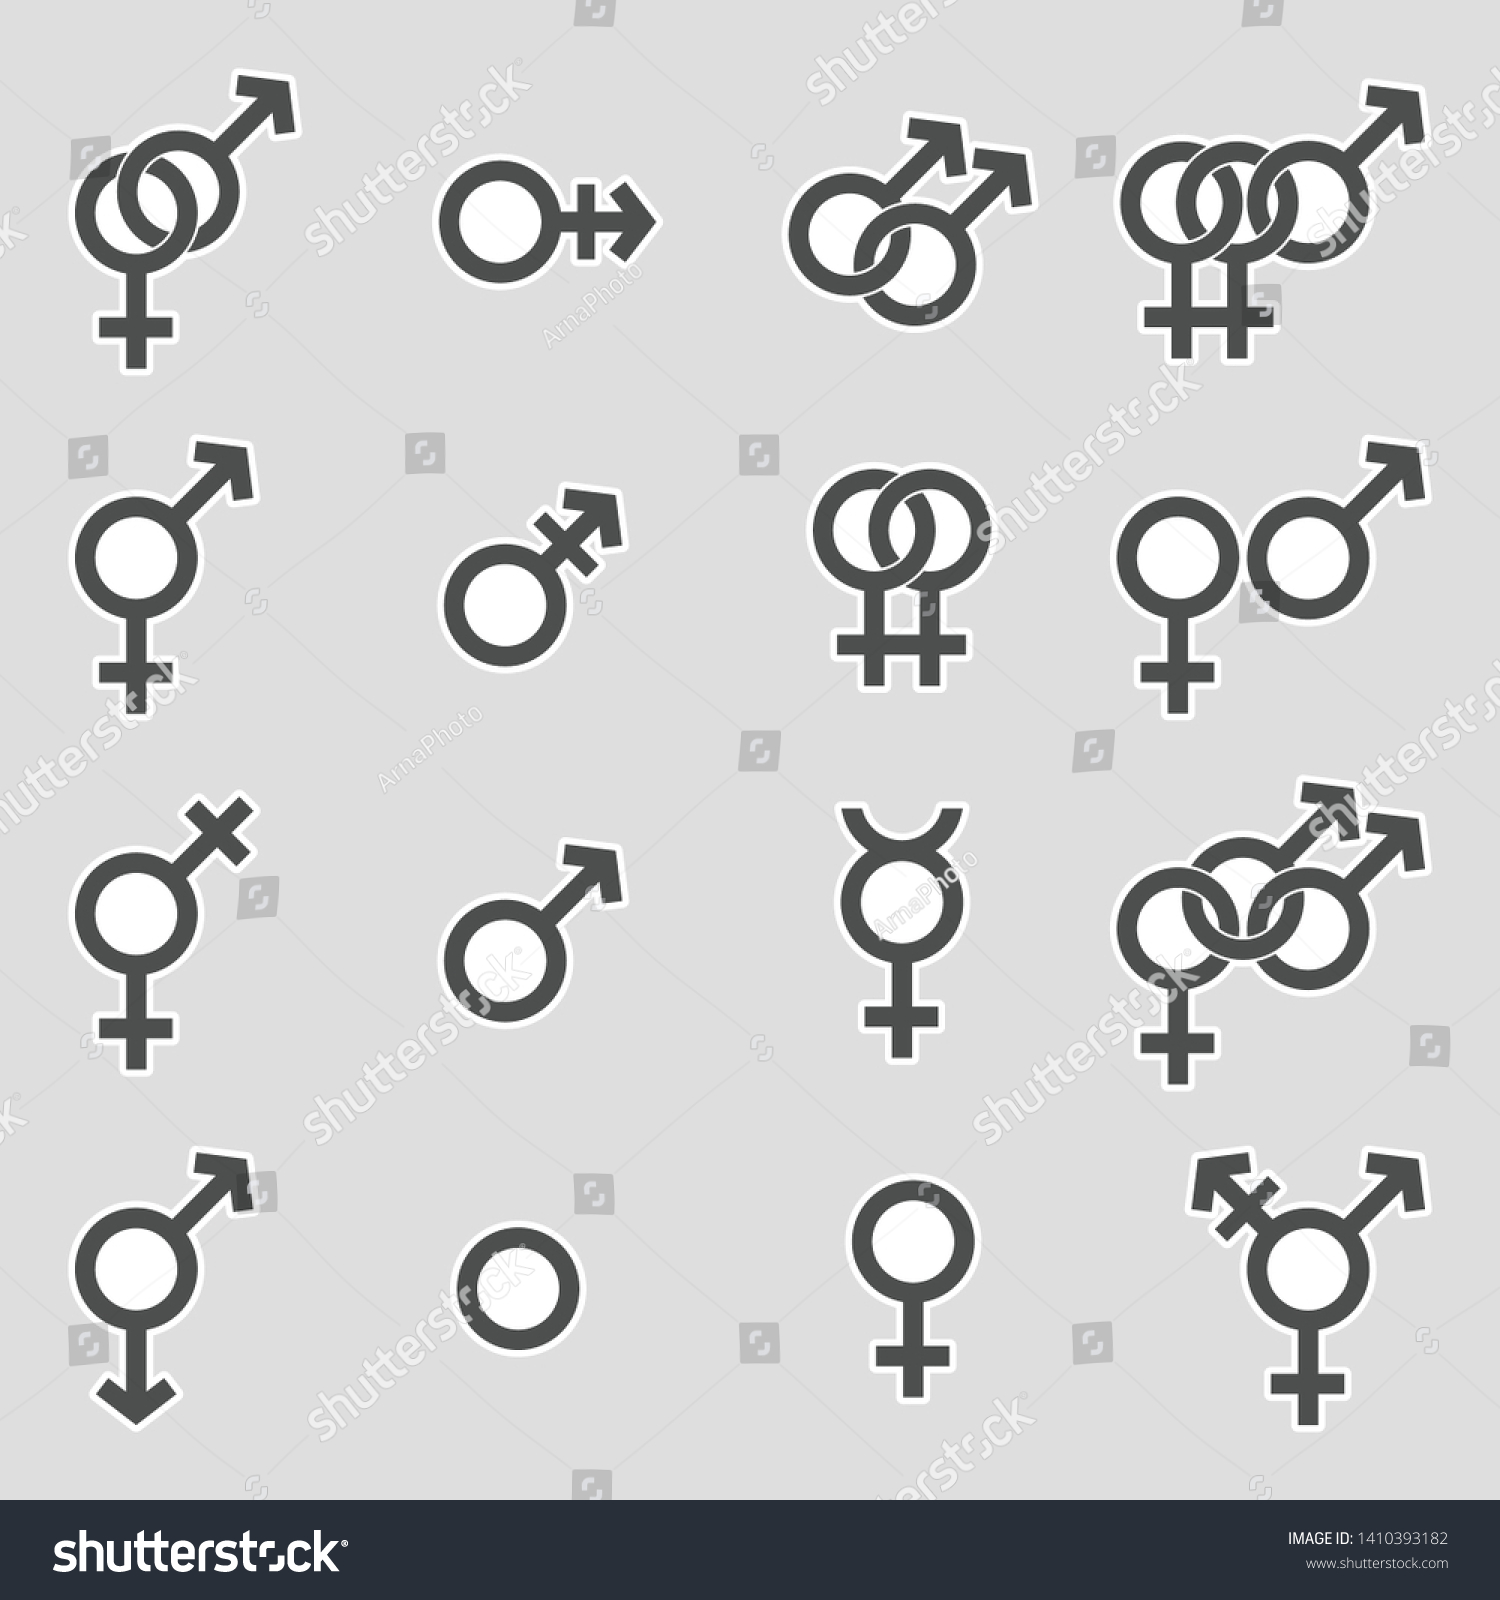 Gender Icons Sticker Design Vector Illustration Stock Vector Royalty